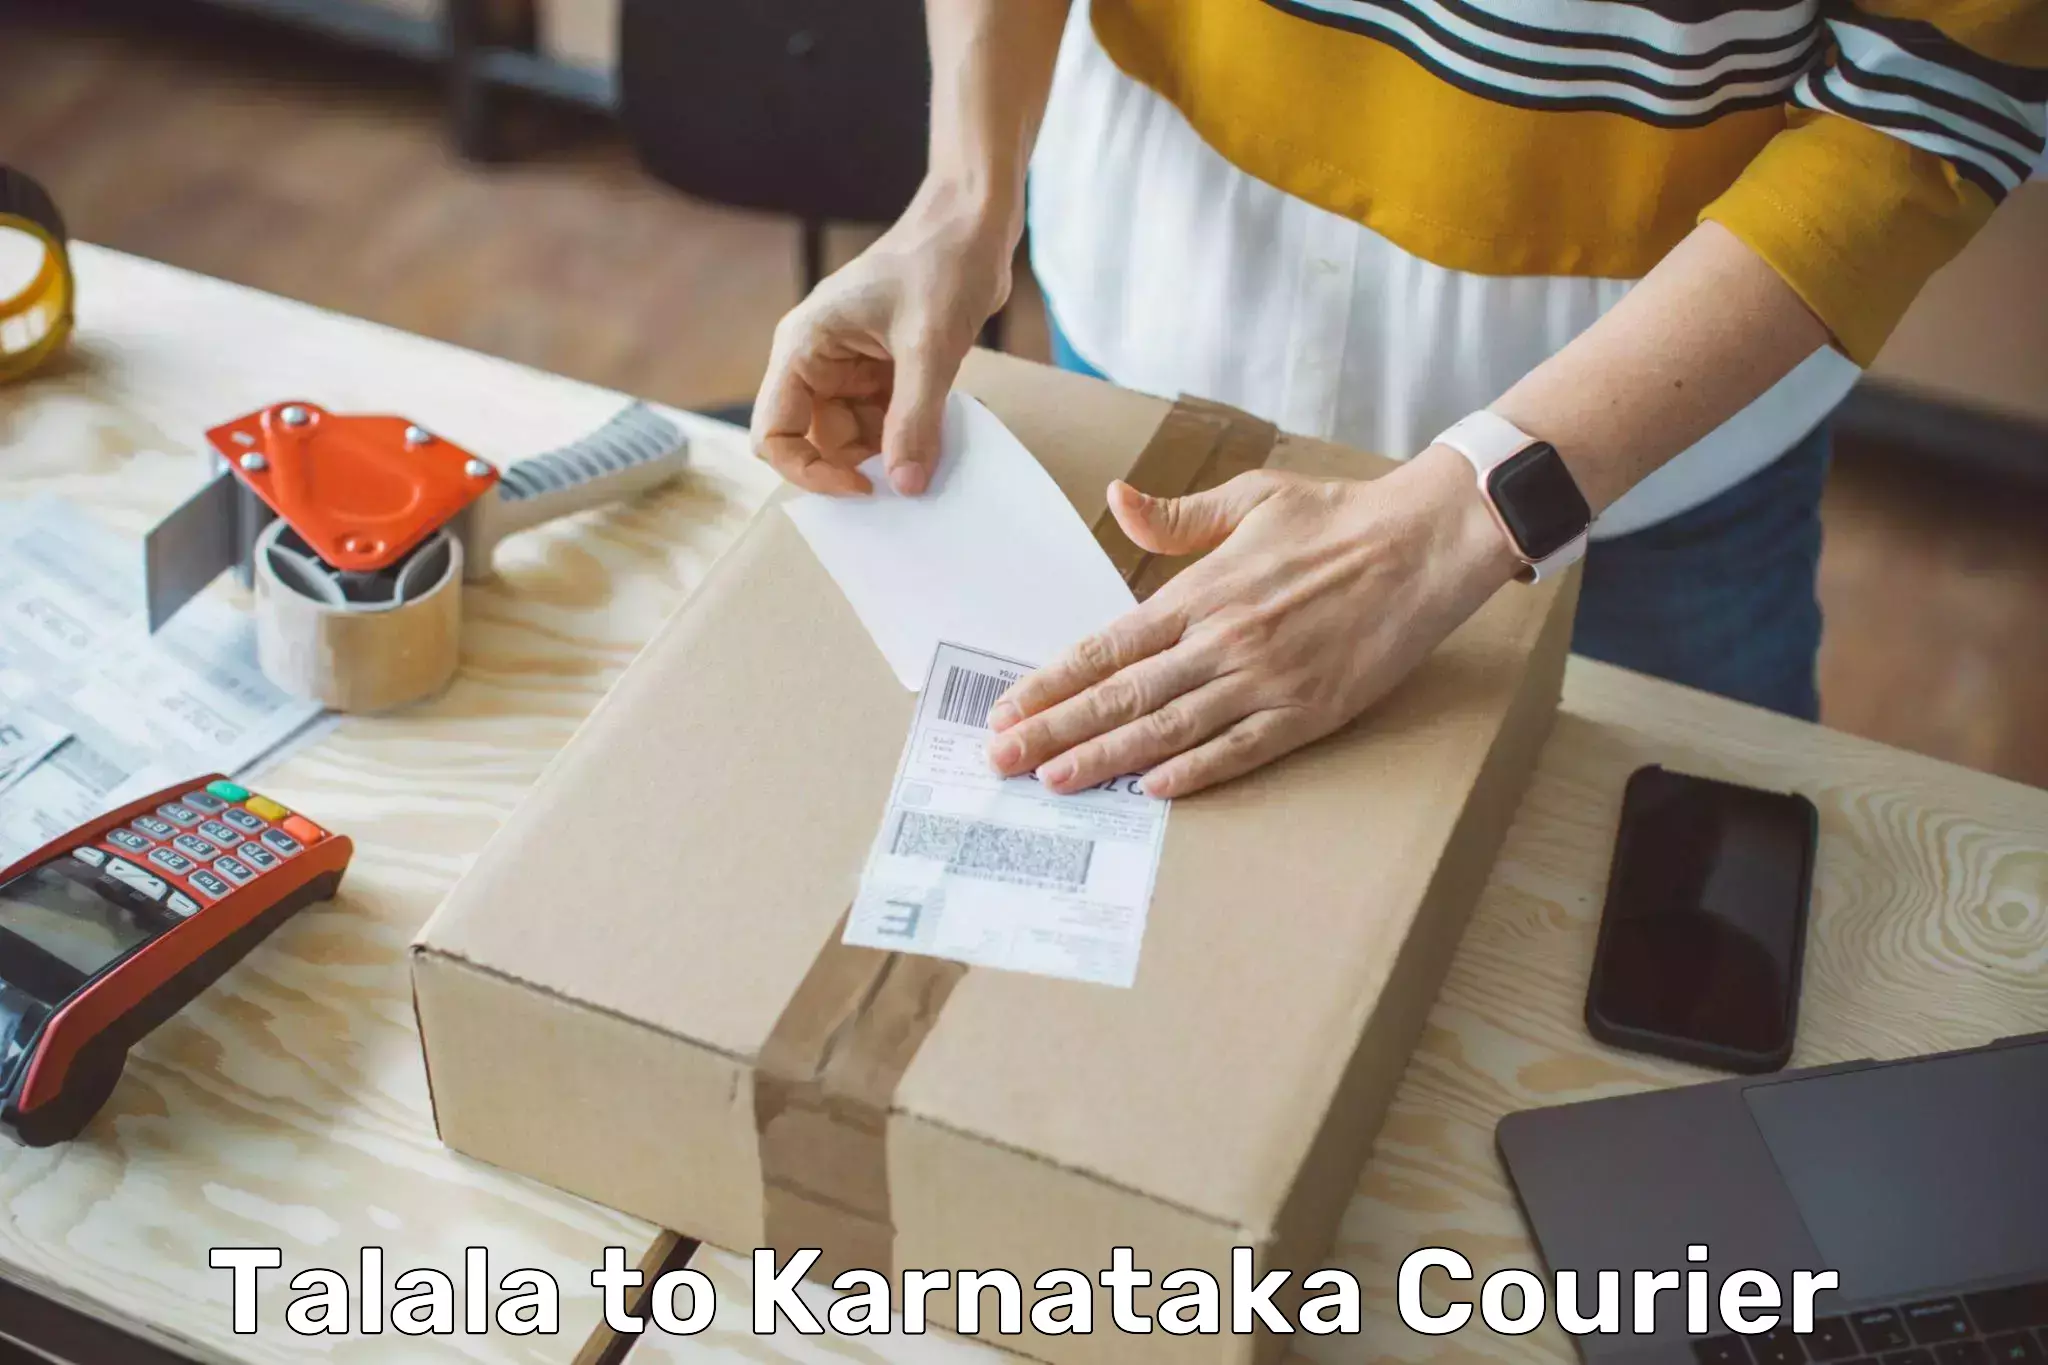 Modern courier technology Talala to Karnataka